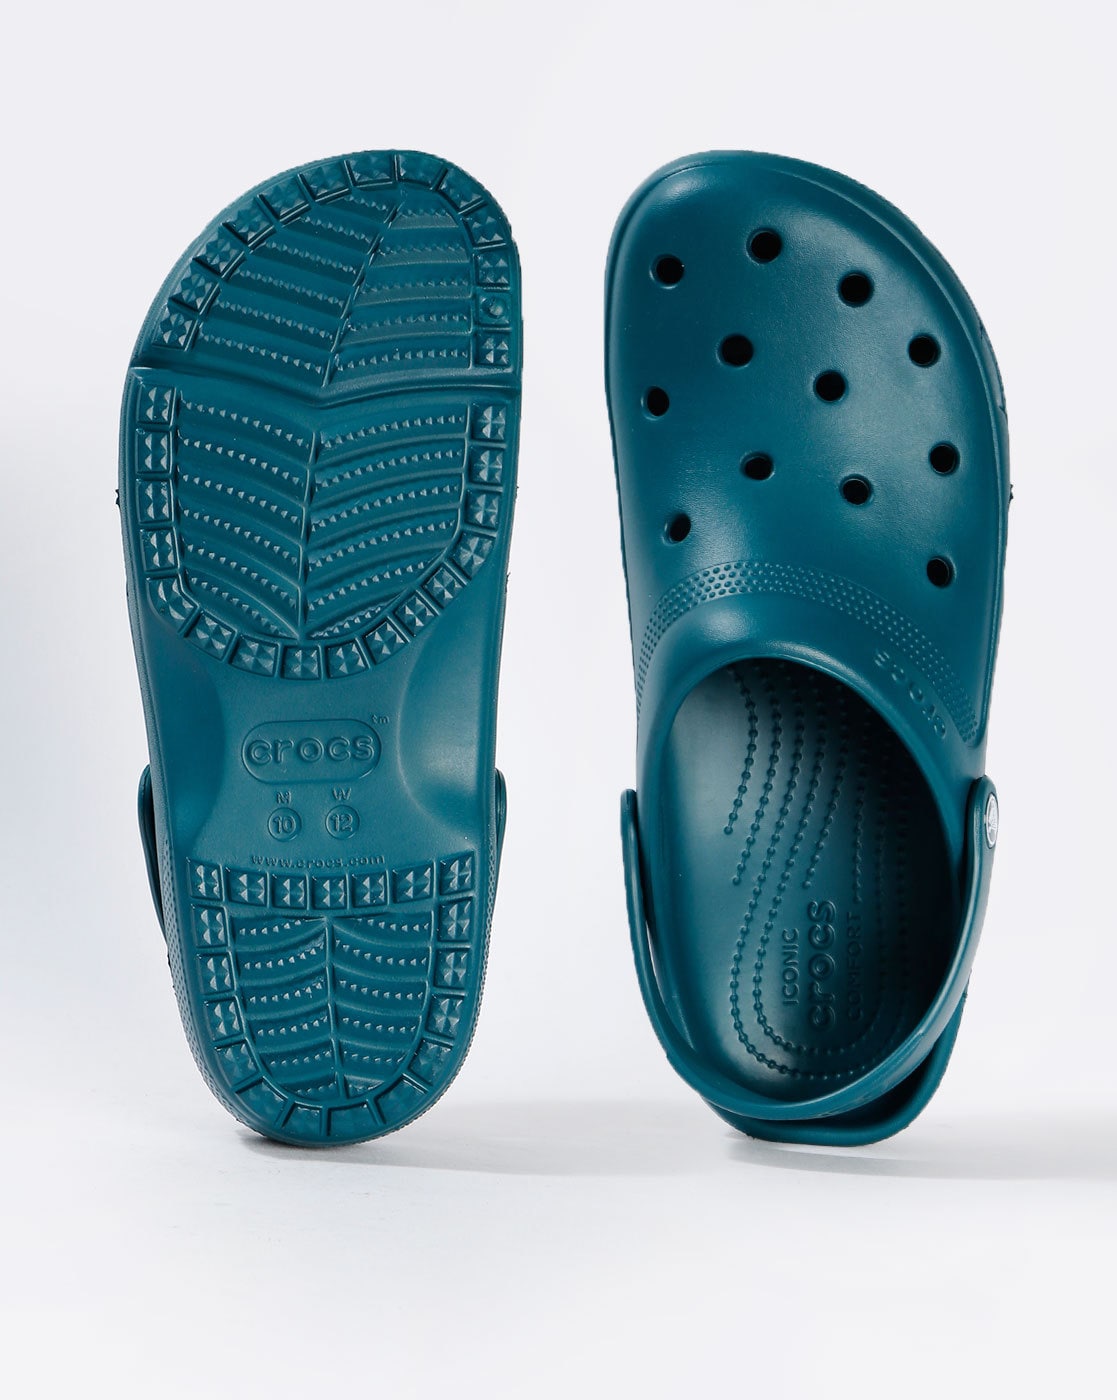 teal colored crocs